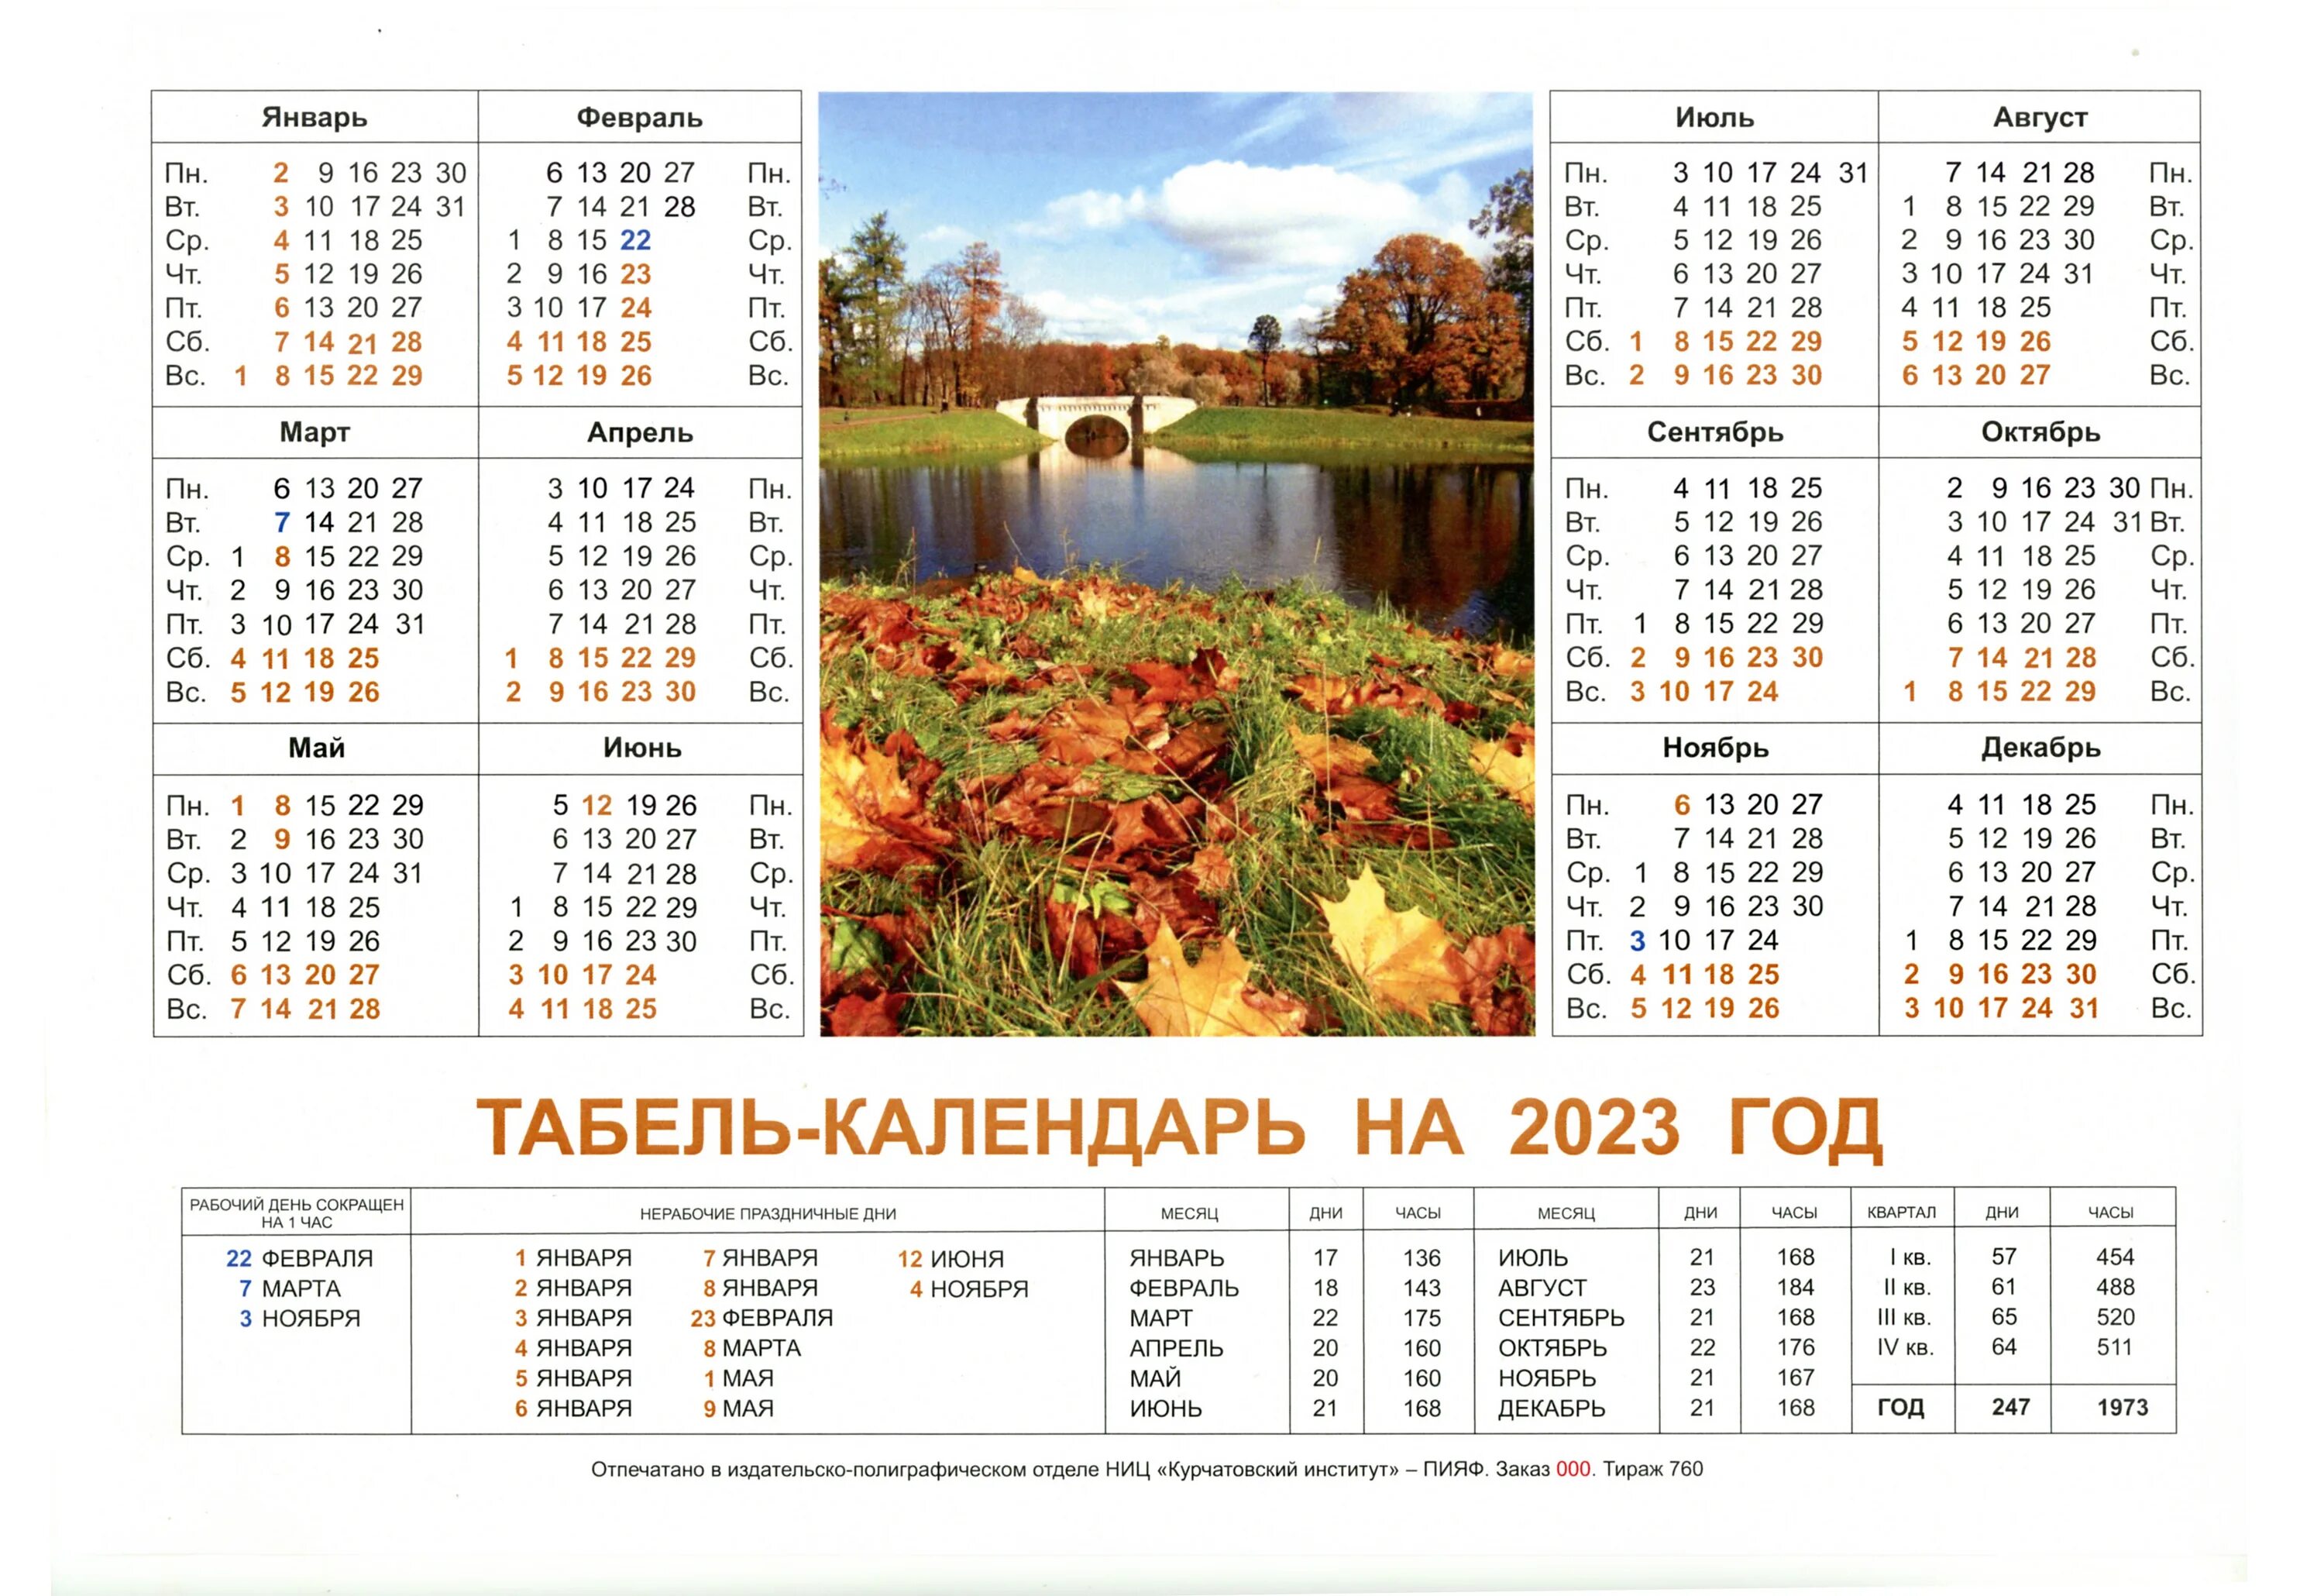 Табель 2023 года производственный. Календарь 2023. Календарь на 2023 год. Календарь на 2023 год Россия. Табель-календарь на 2023 год производственный.